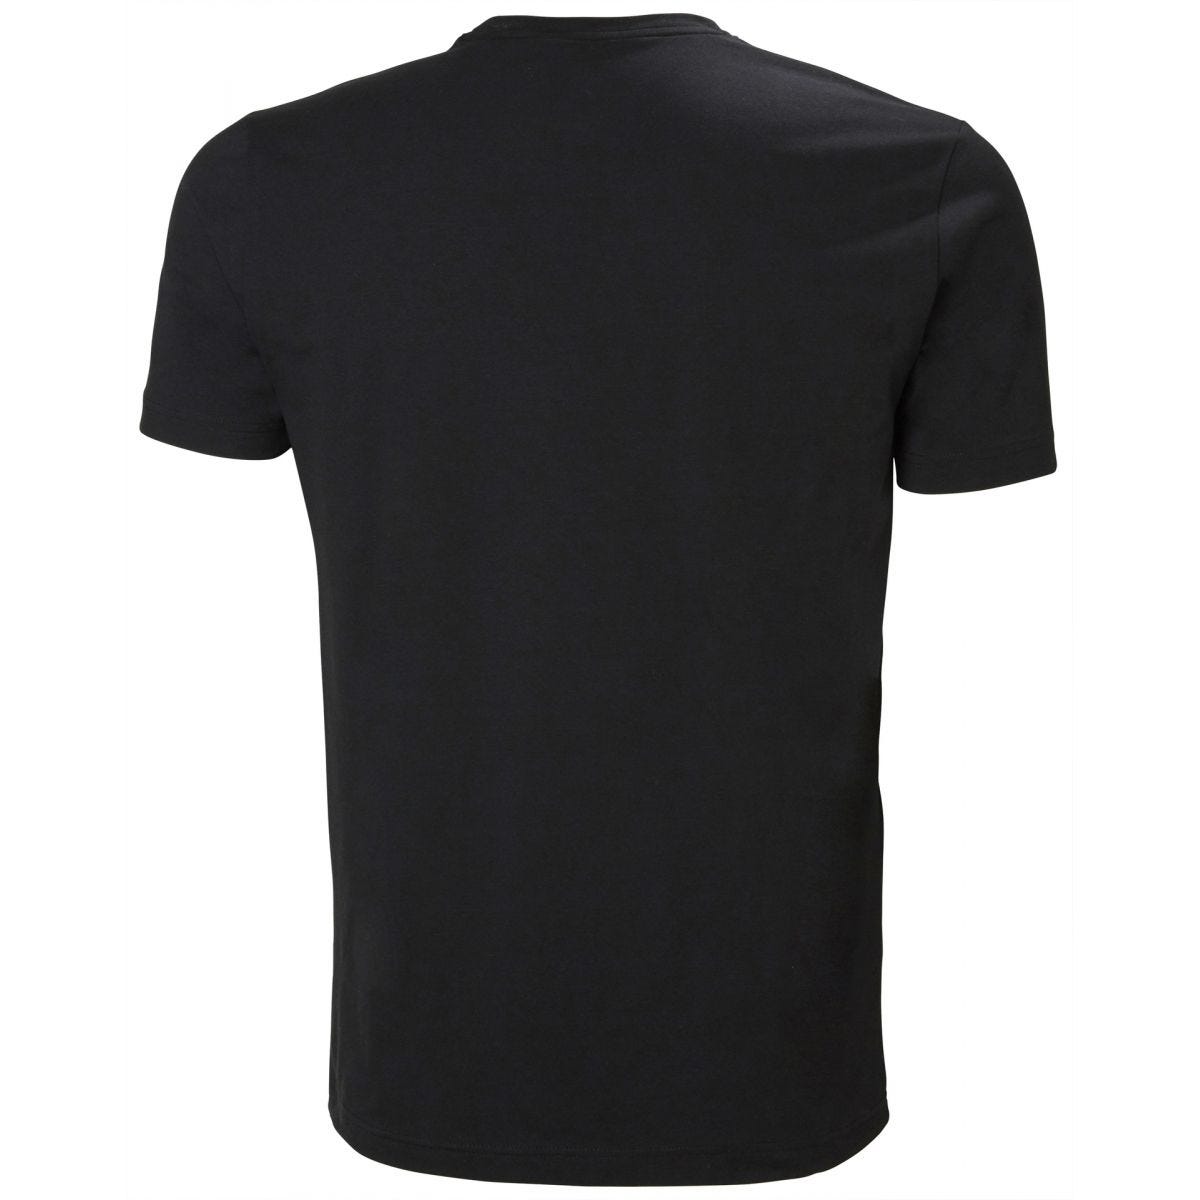 Tee-shirt Kensington Noir - Helly Hansen - Taille M 1